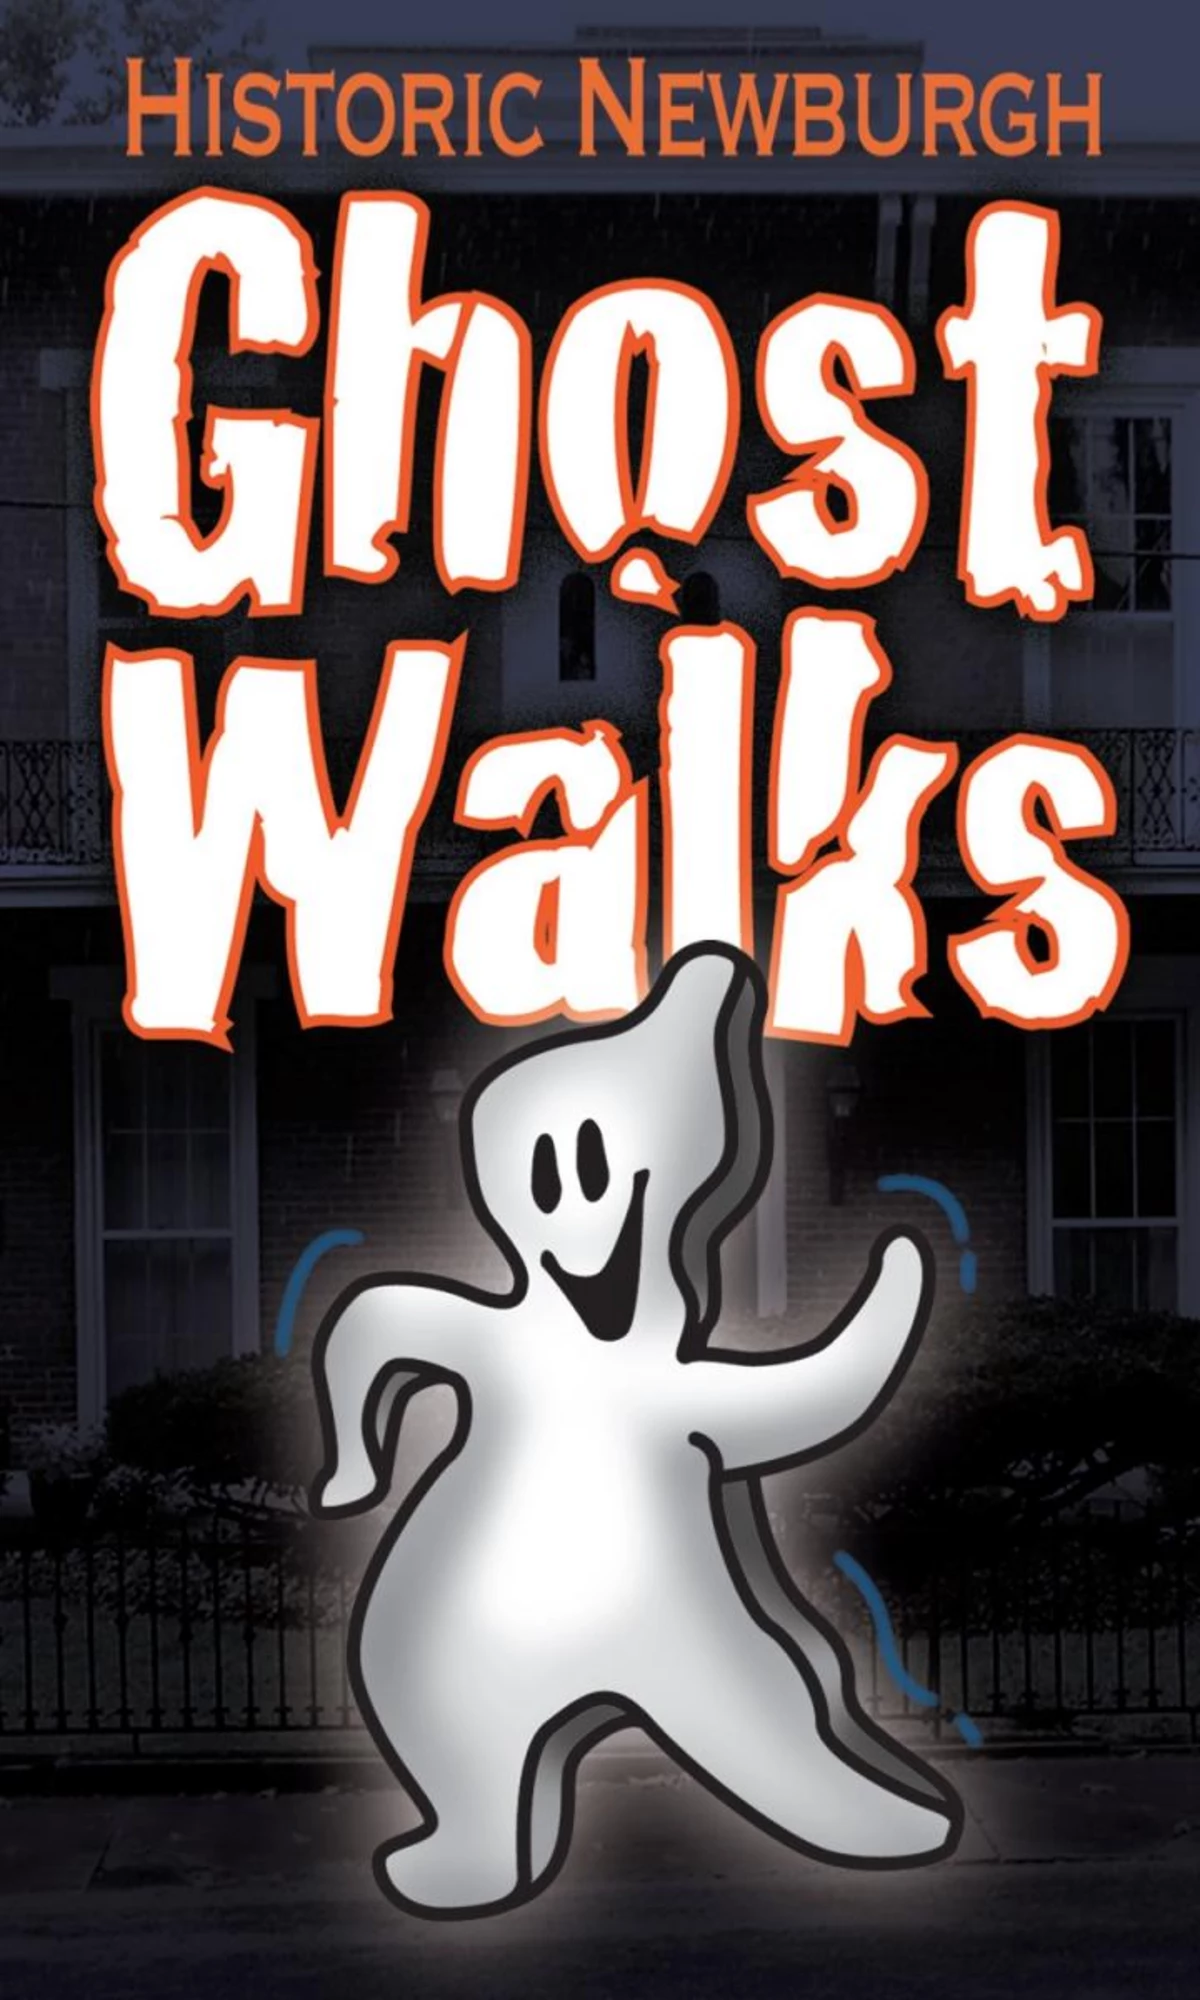 Historic Newburgh Ghost Walks are Back!